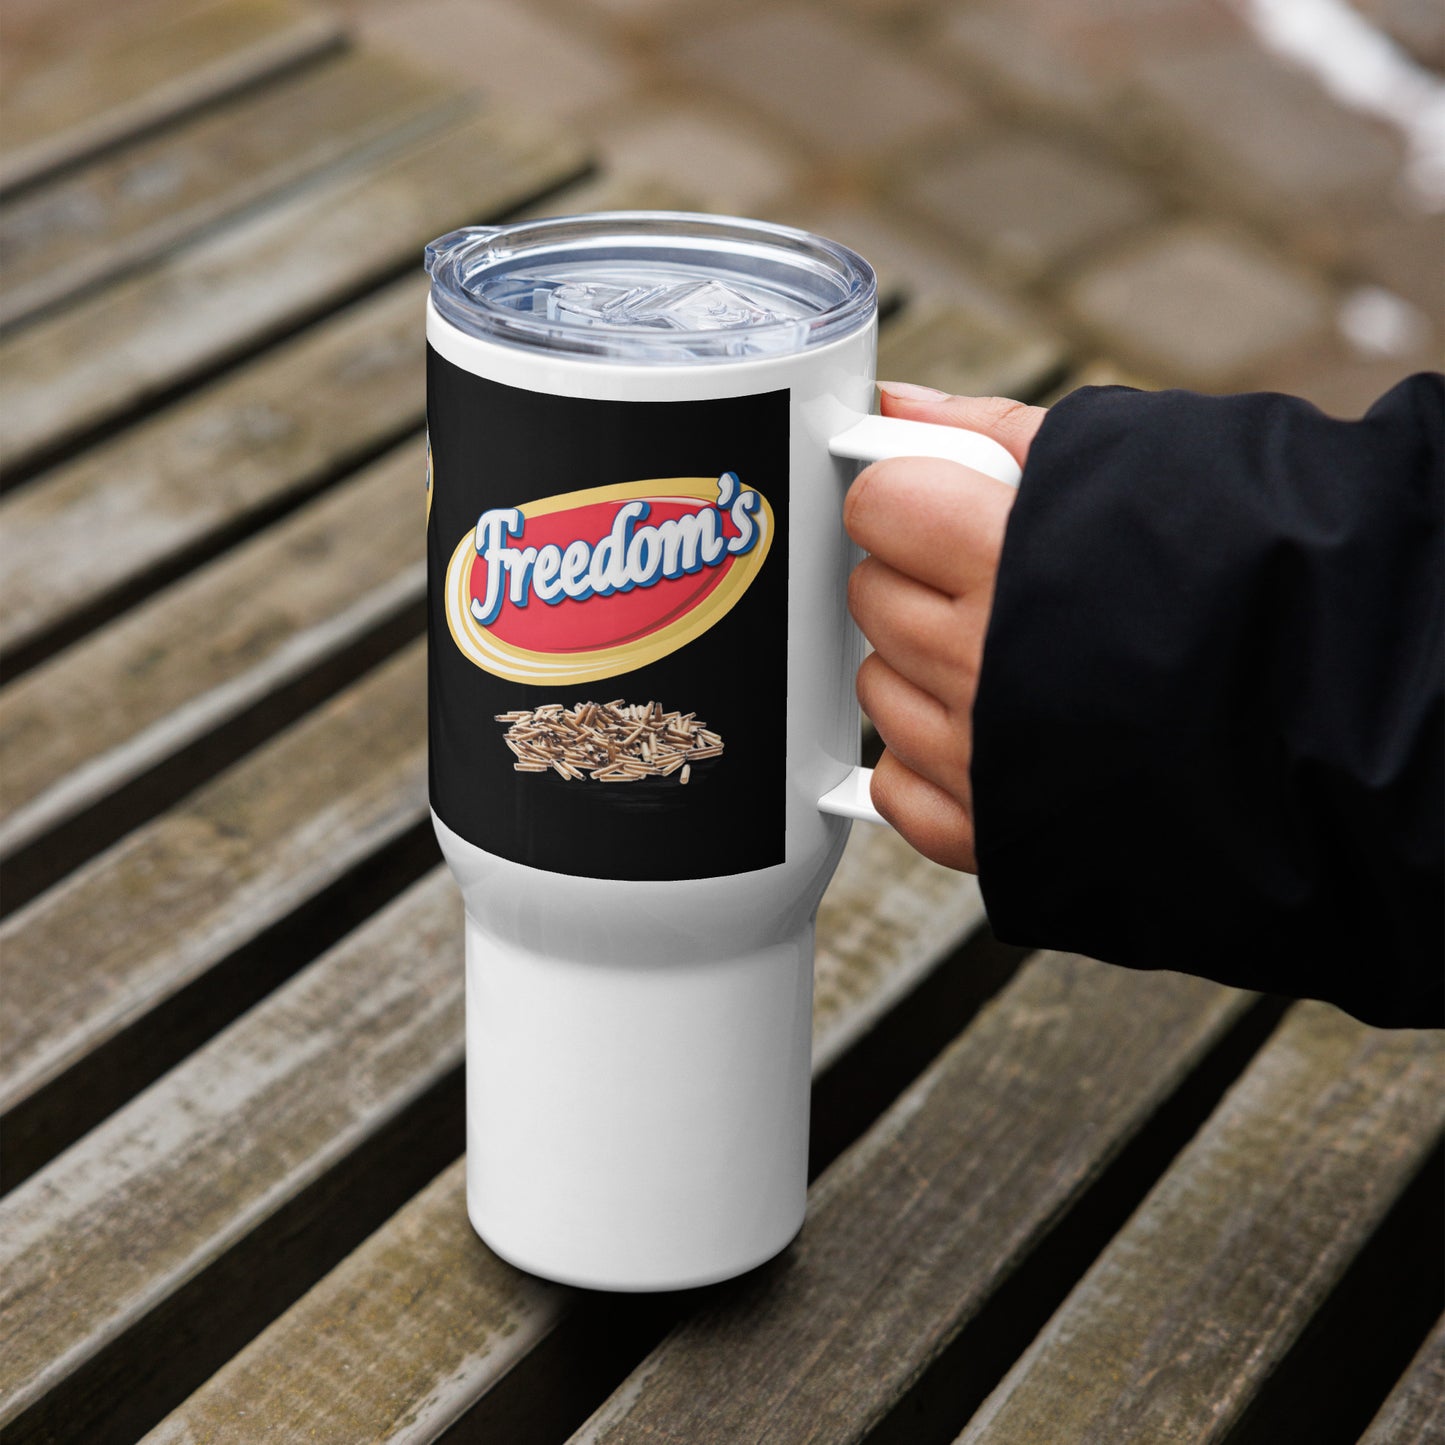 Freedom’s Travel mug with a handle